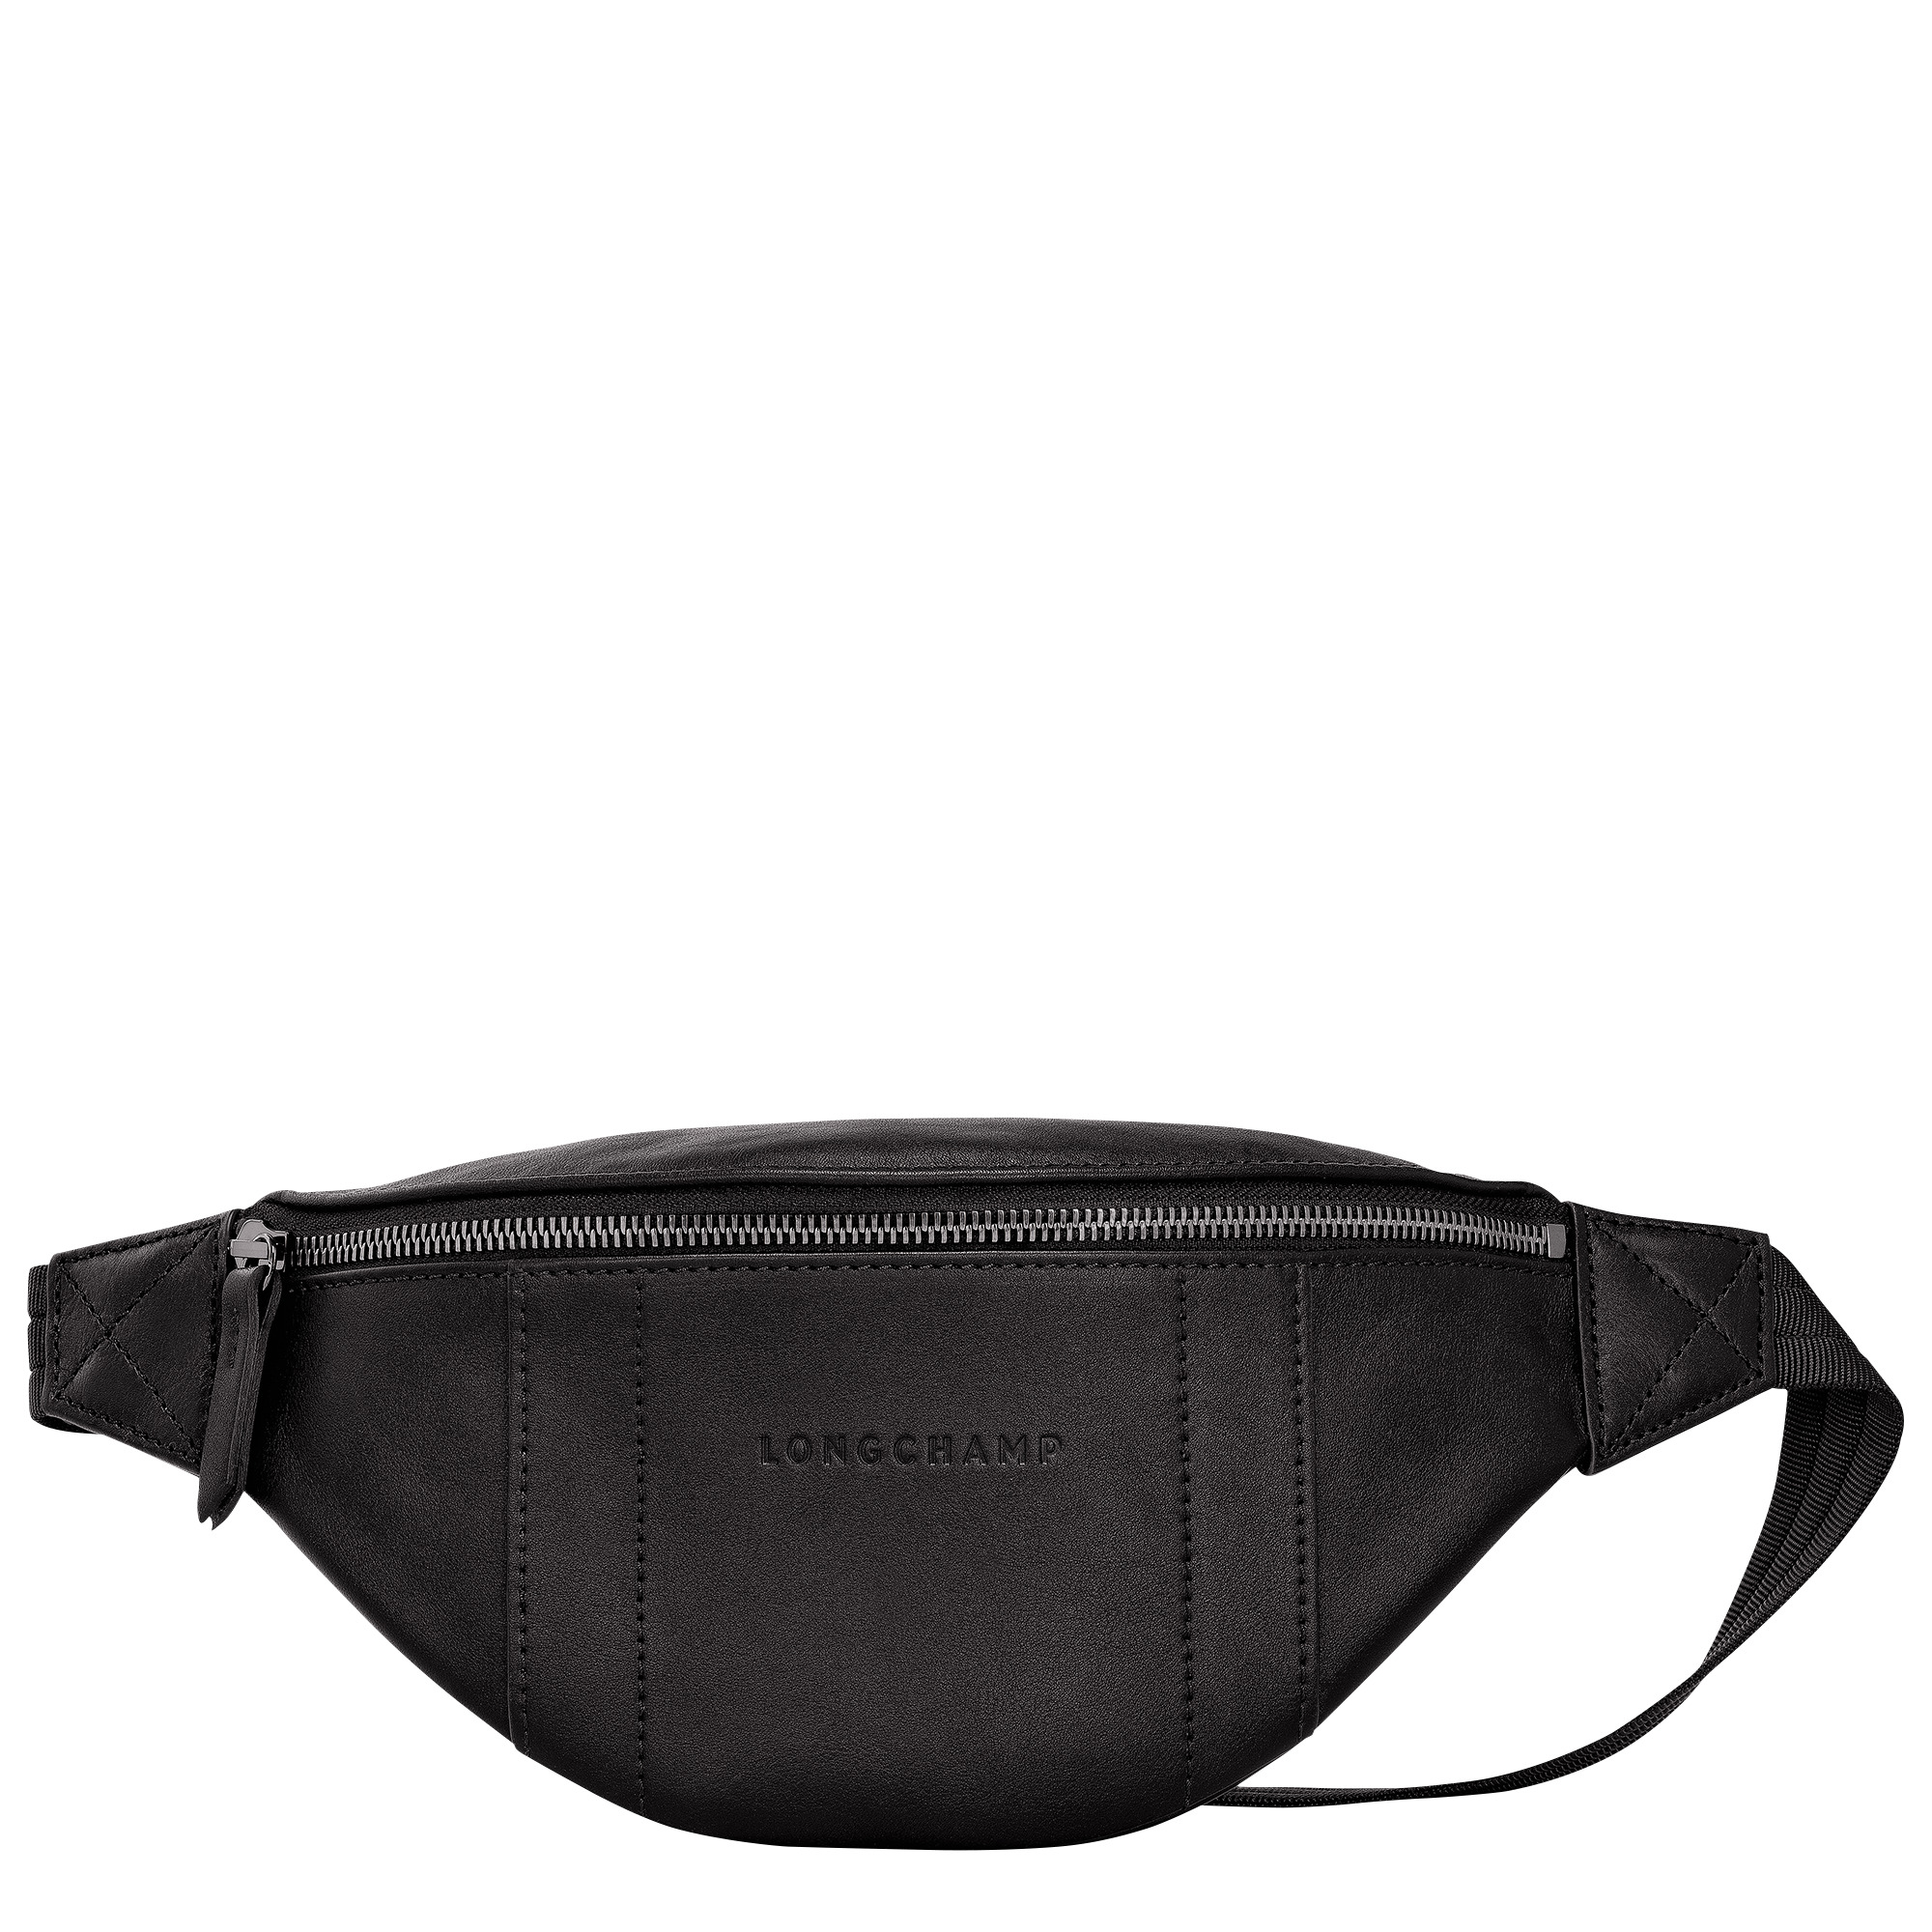 Longchamp 3D S Belt bag Black - Leather - 1